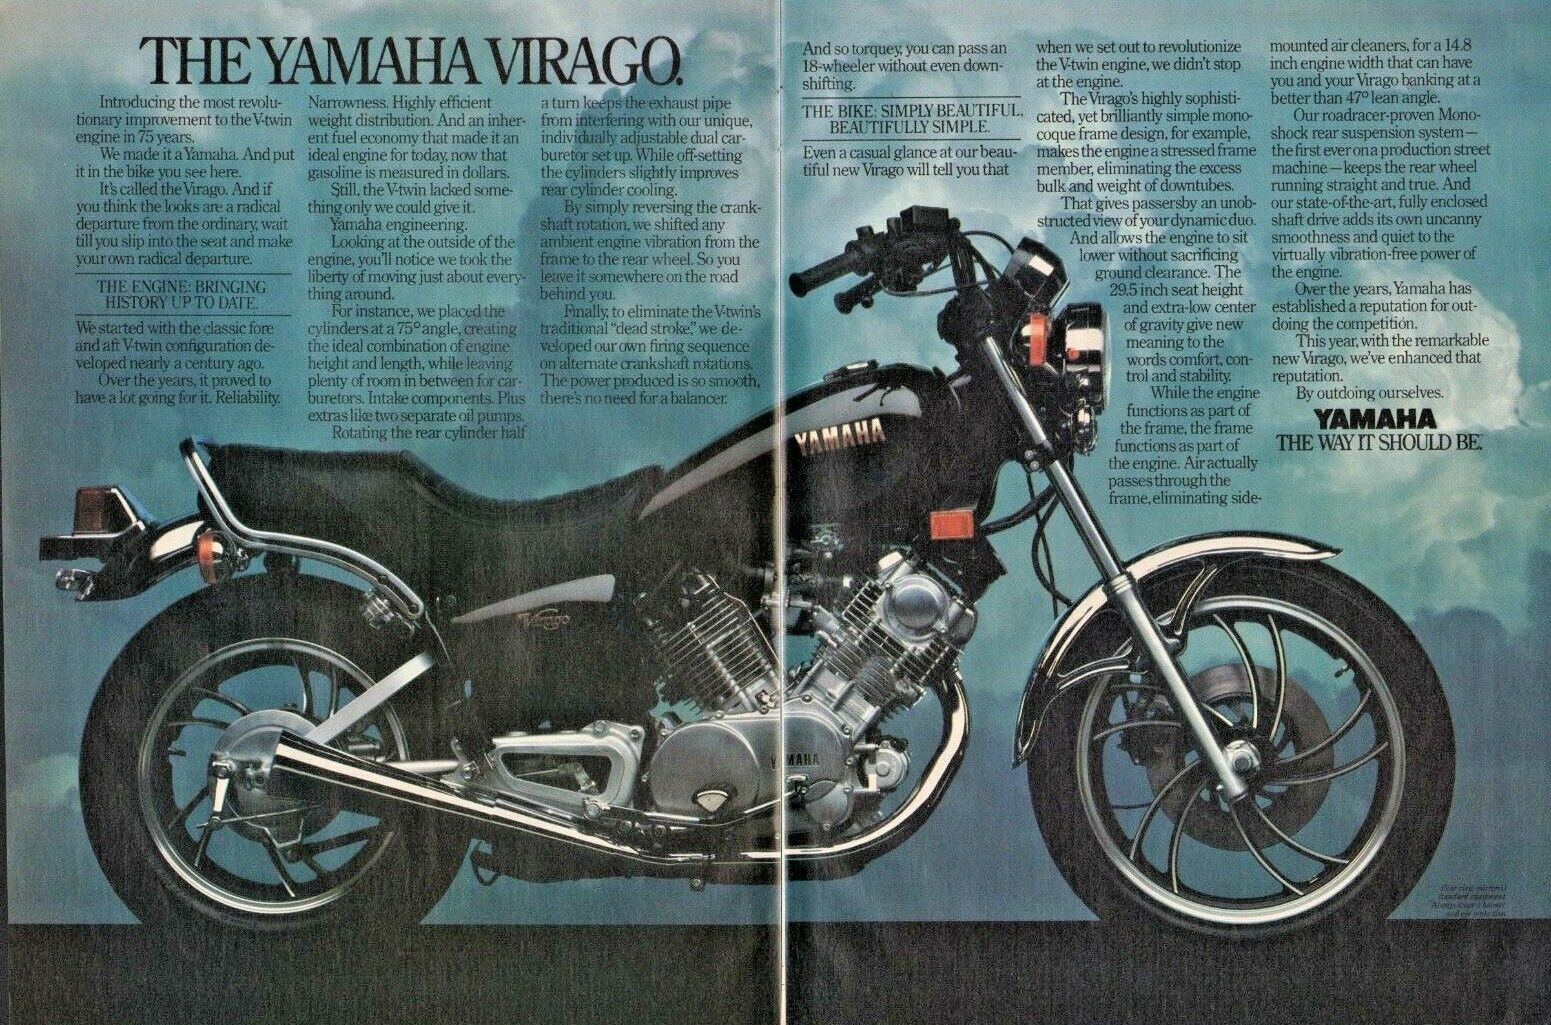 1981 Yamaha Virago - 2-Page Vintage Motorcycle Ad